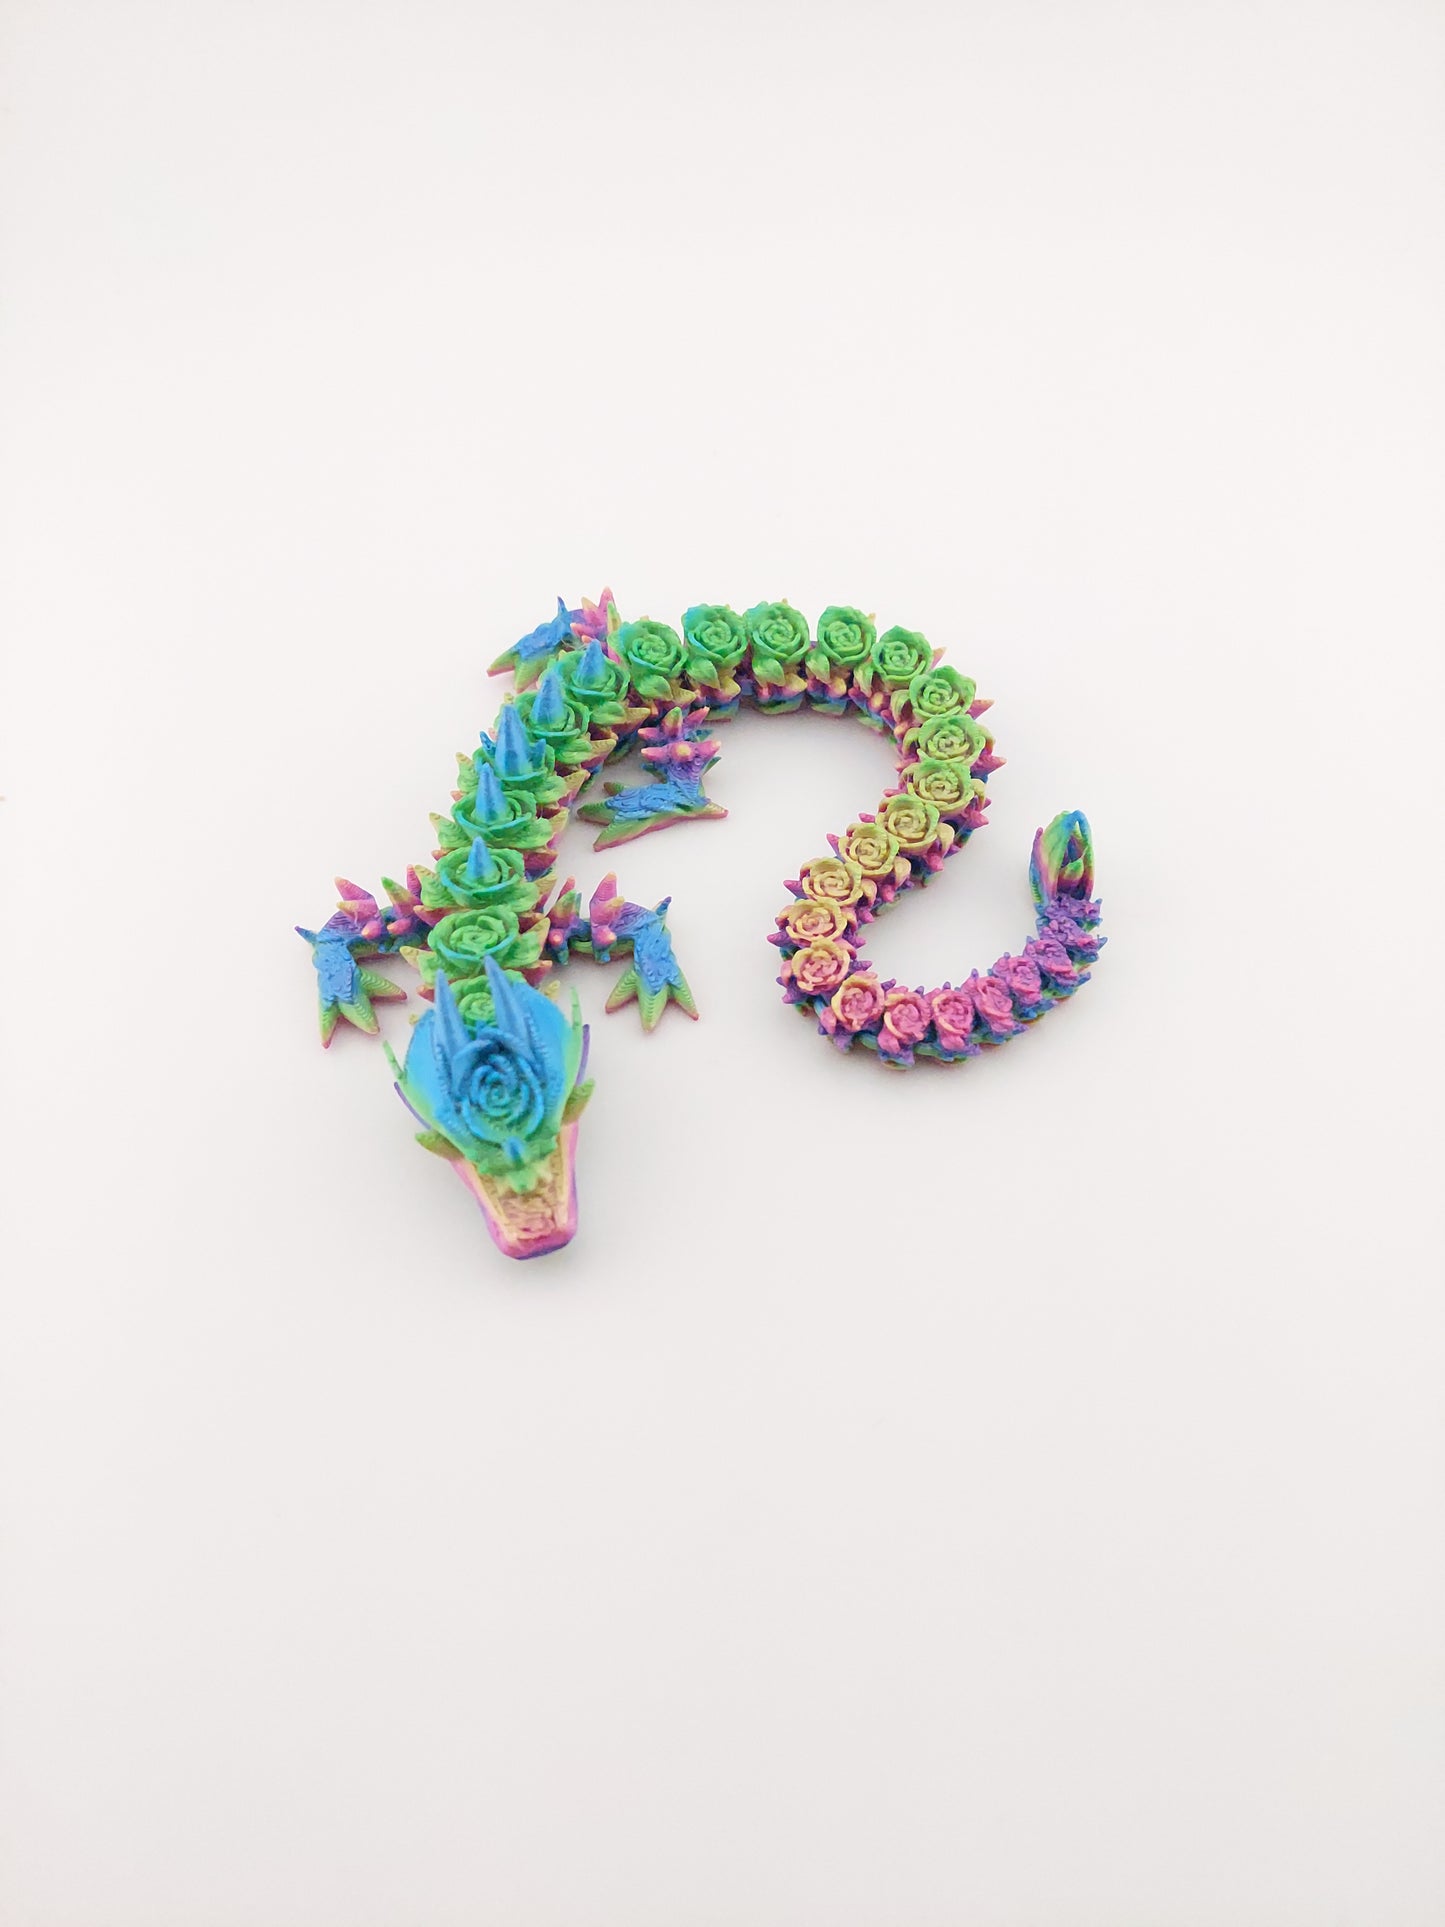 Articulated Rose Dragon - 3D Printed Fantasy Creature - Home/Desk Decor